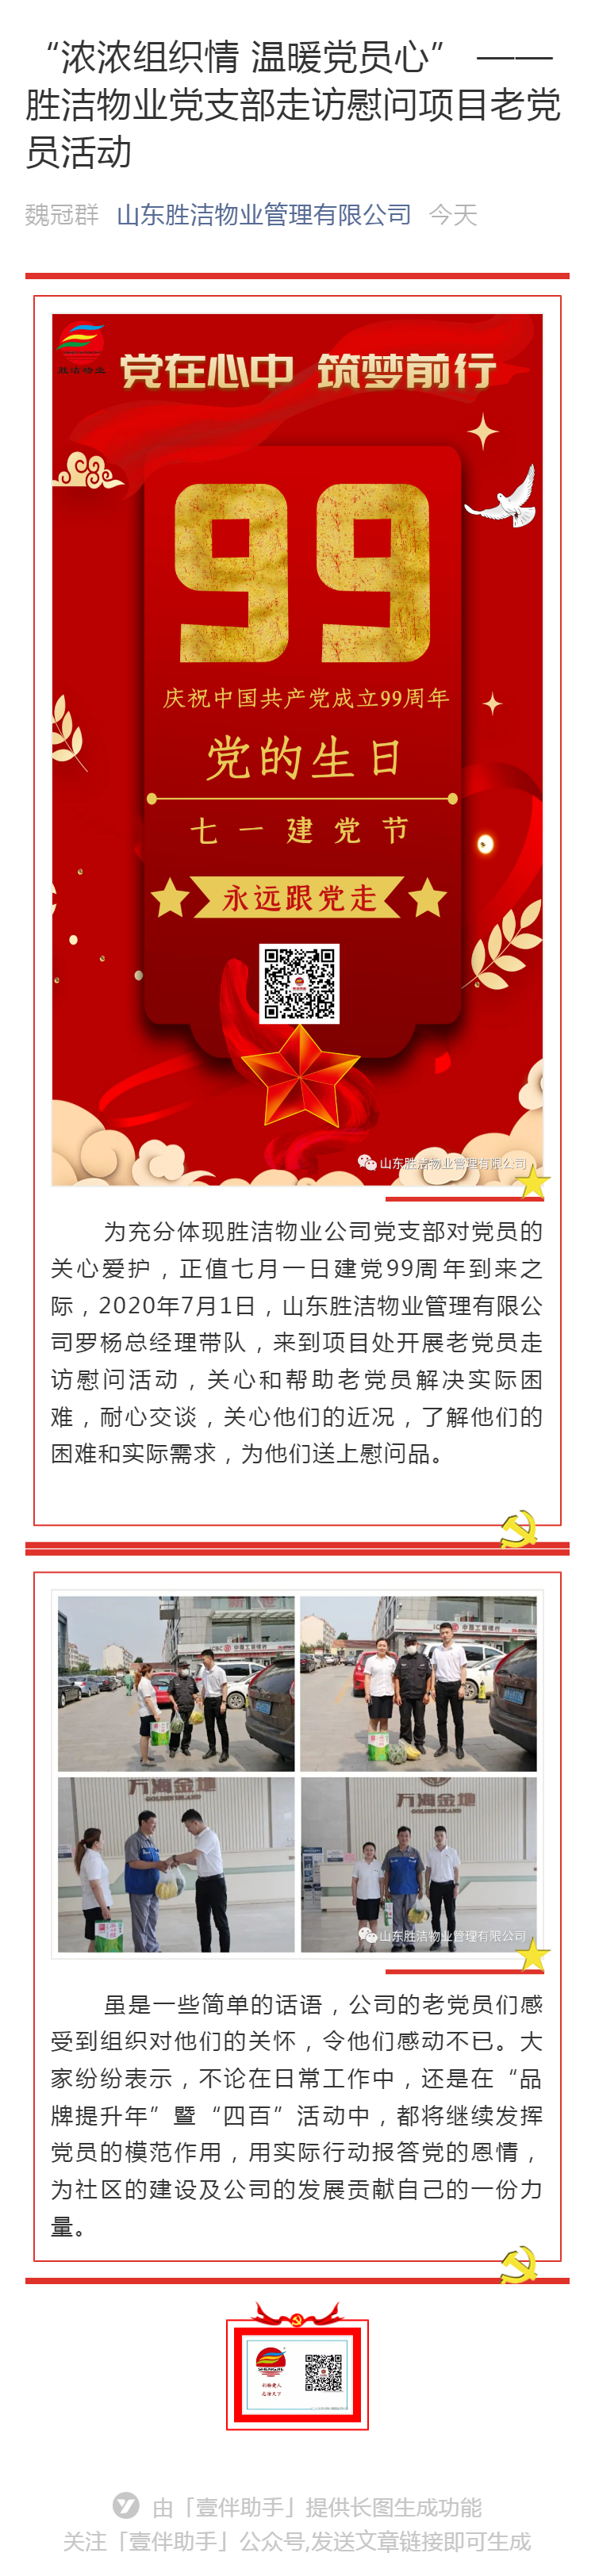 20200701_1657_yiban_screenshot.png